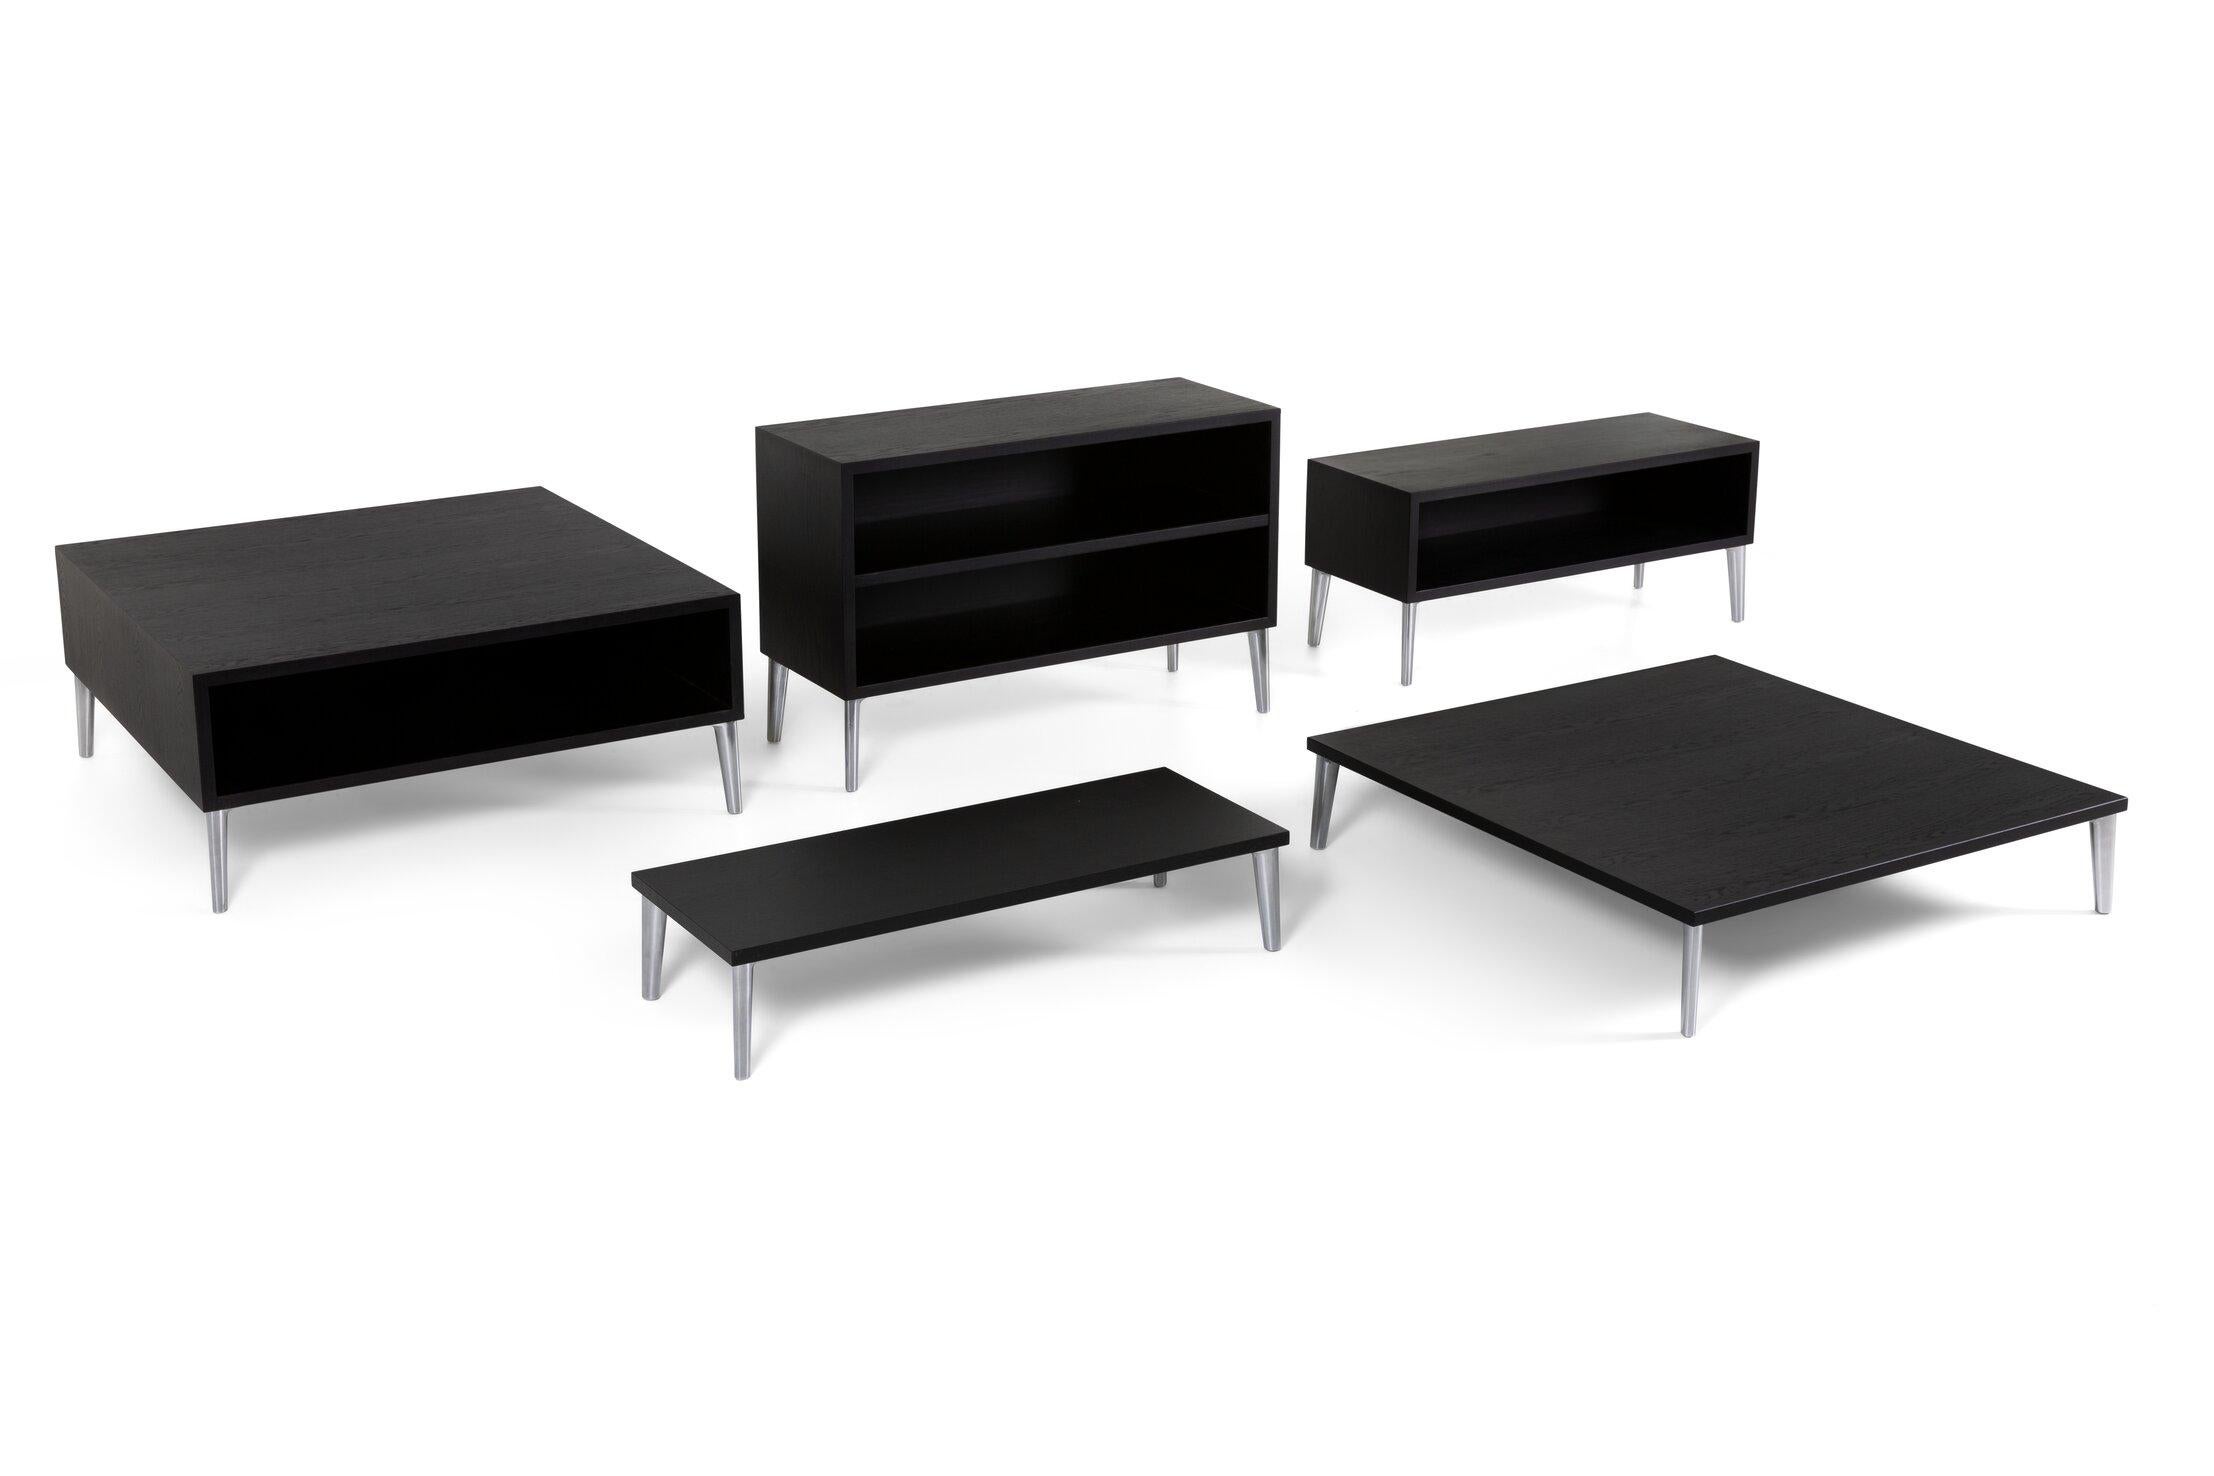 Veneer Moooi Sofa So Good Demi Table Black Stained by Marcel Wanders Studio For Sale